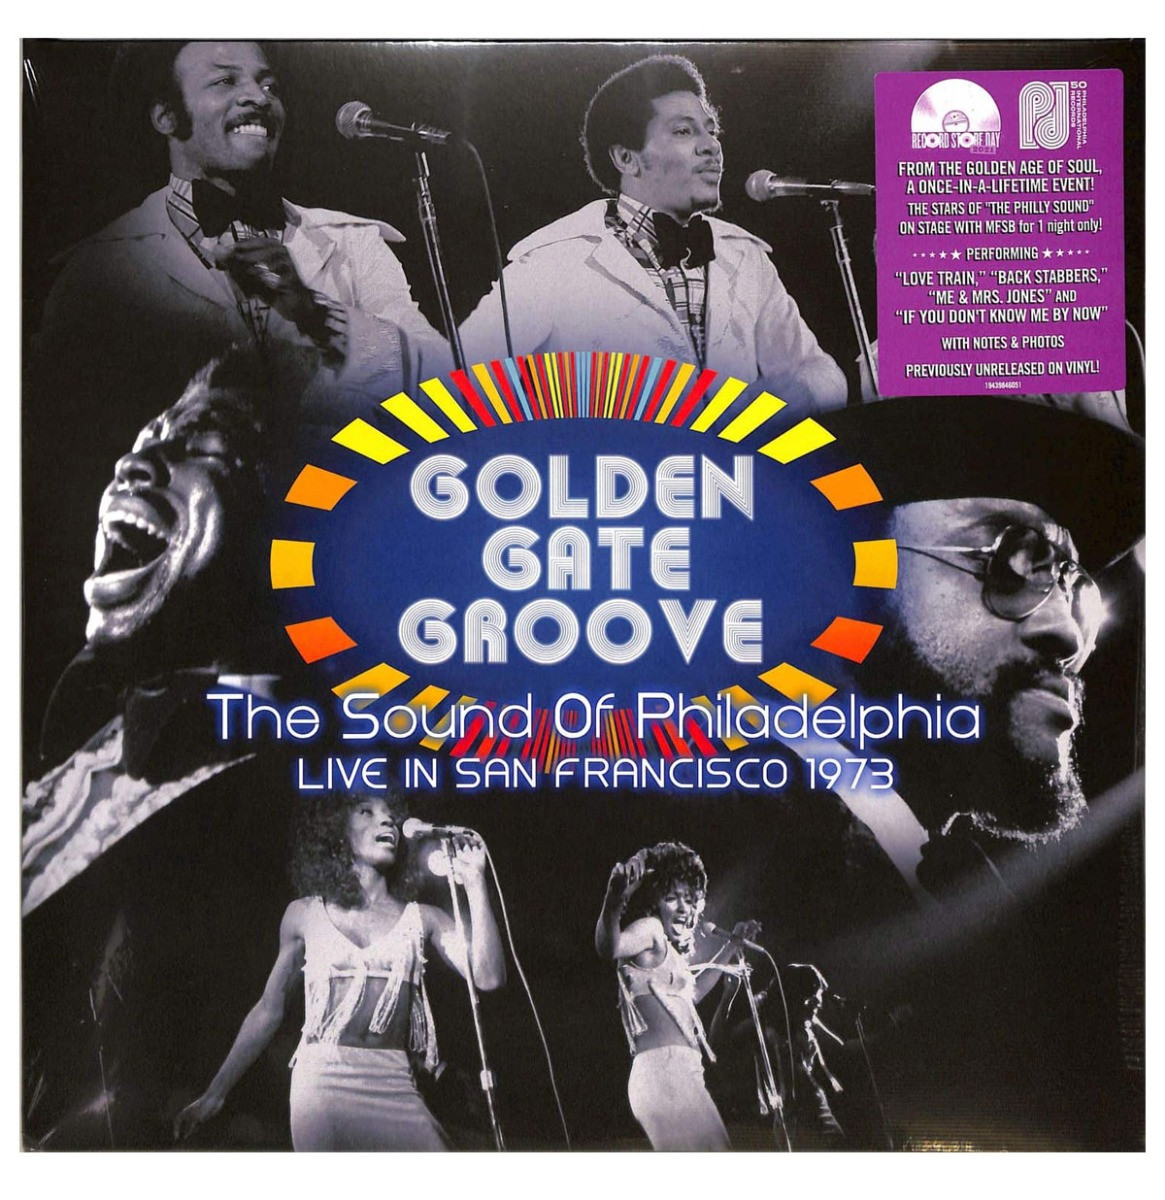 Various Artists - Golden Gate Groove The Sound Of Philadelphia Live In San Fransisco 1973 2-LP - RSD